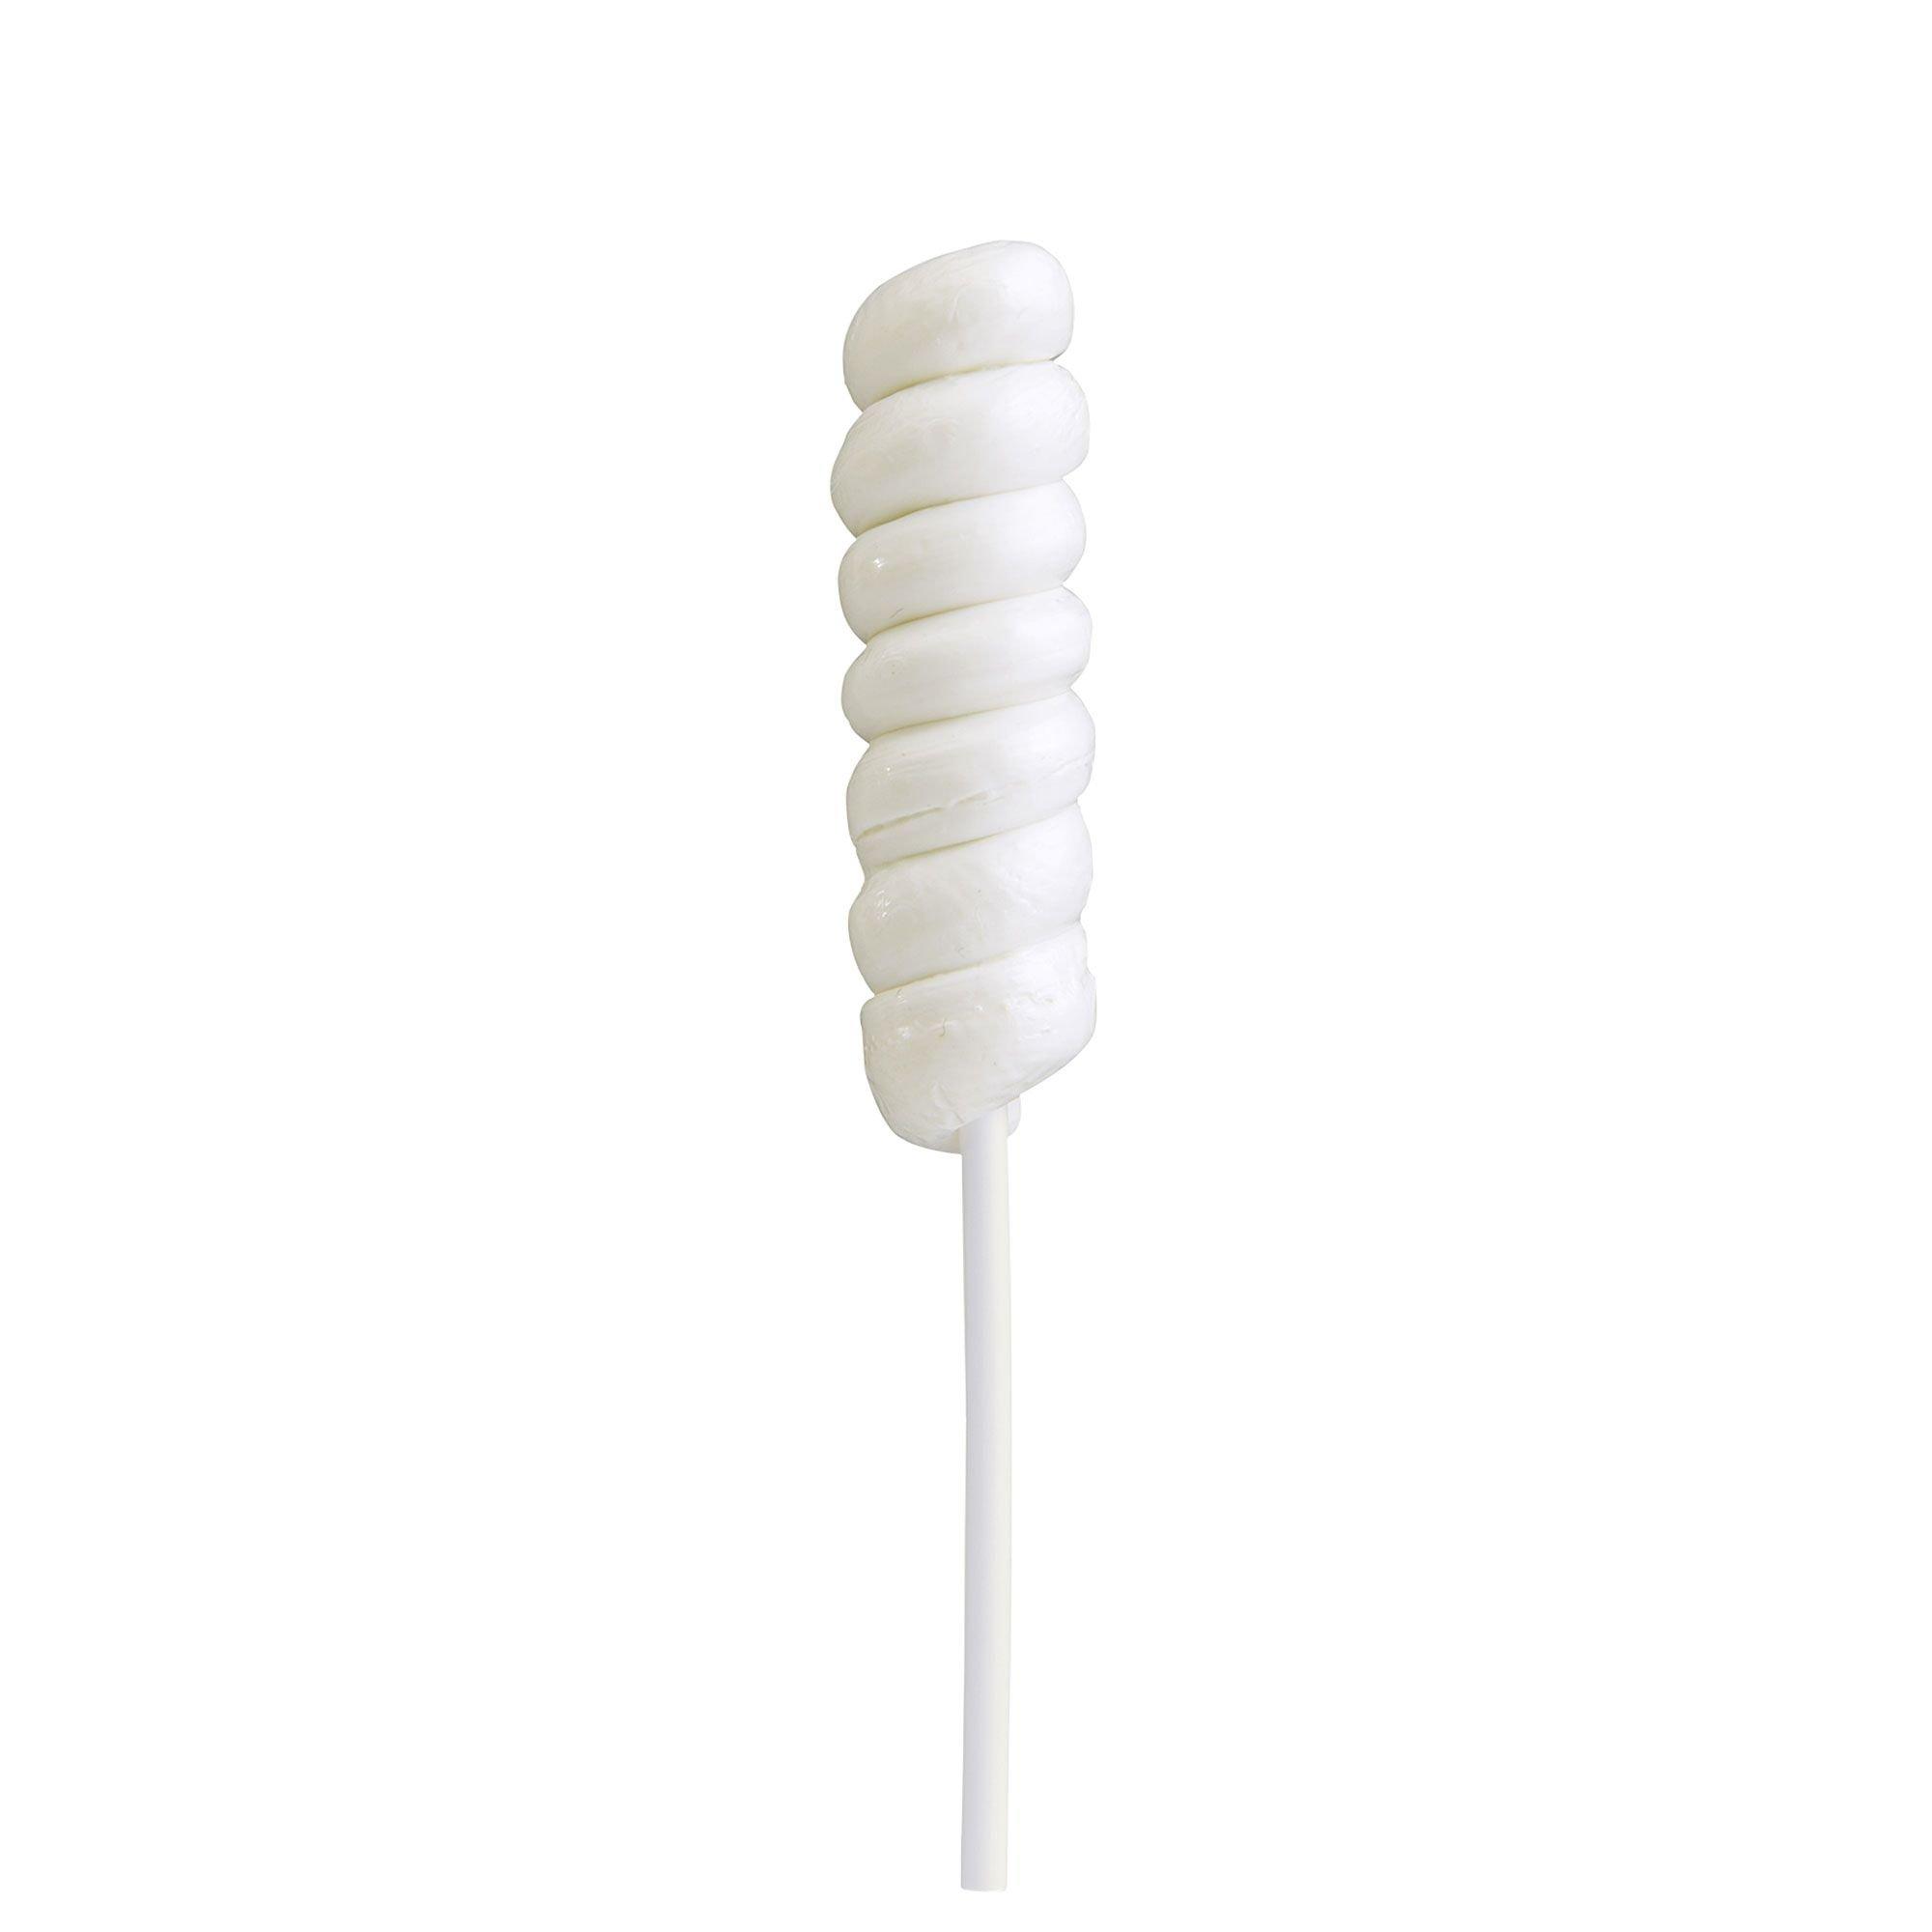 White Twisty Lollipops, 20pc - Tutti Frutti Flavor